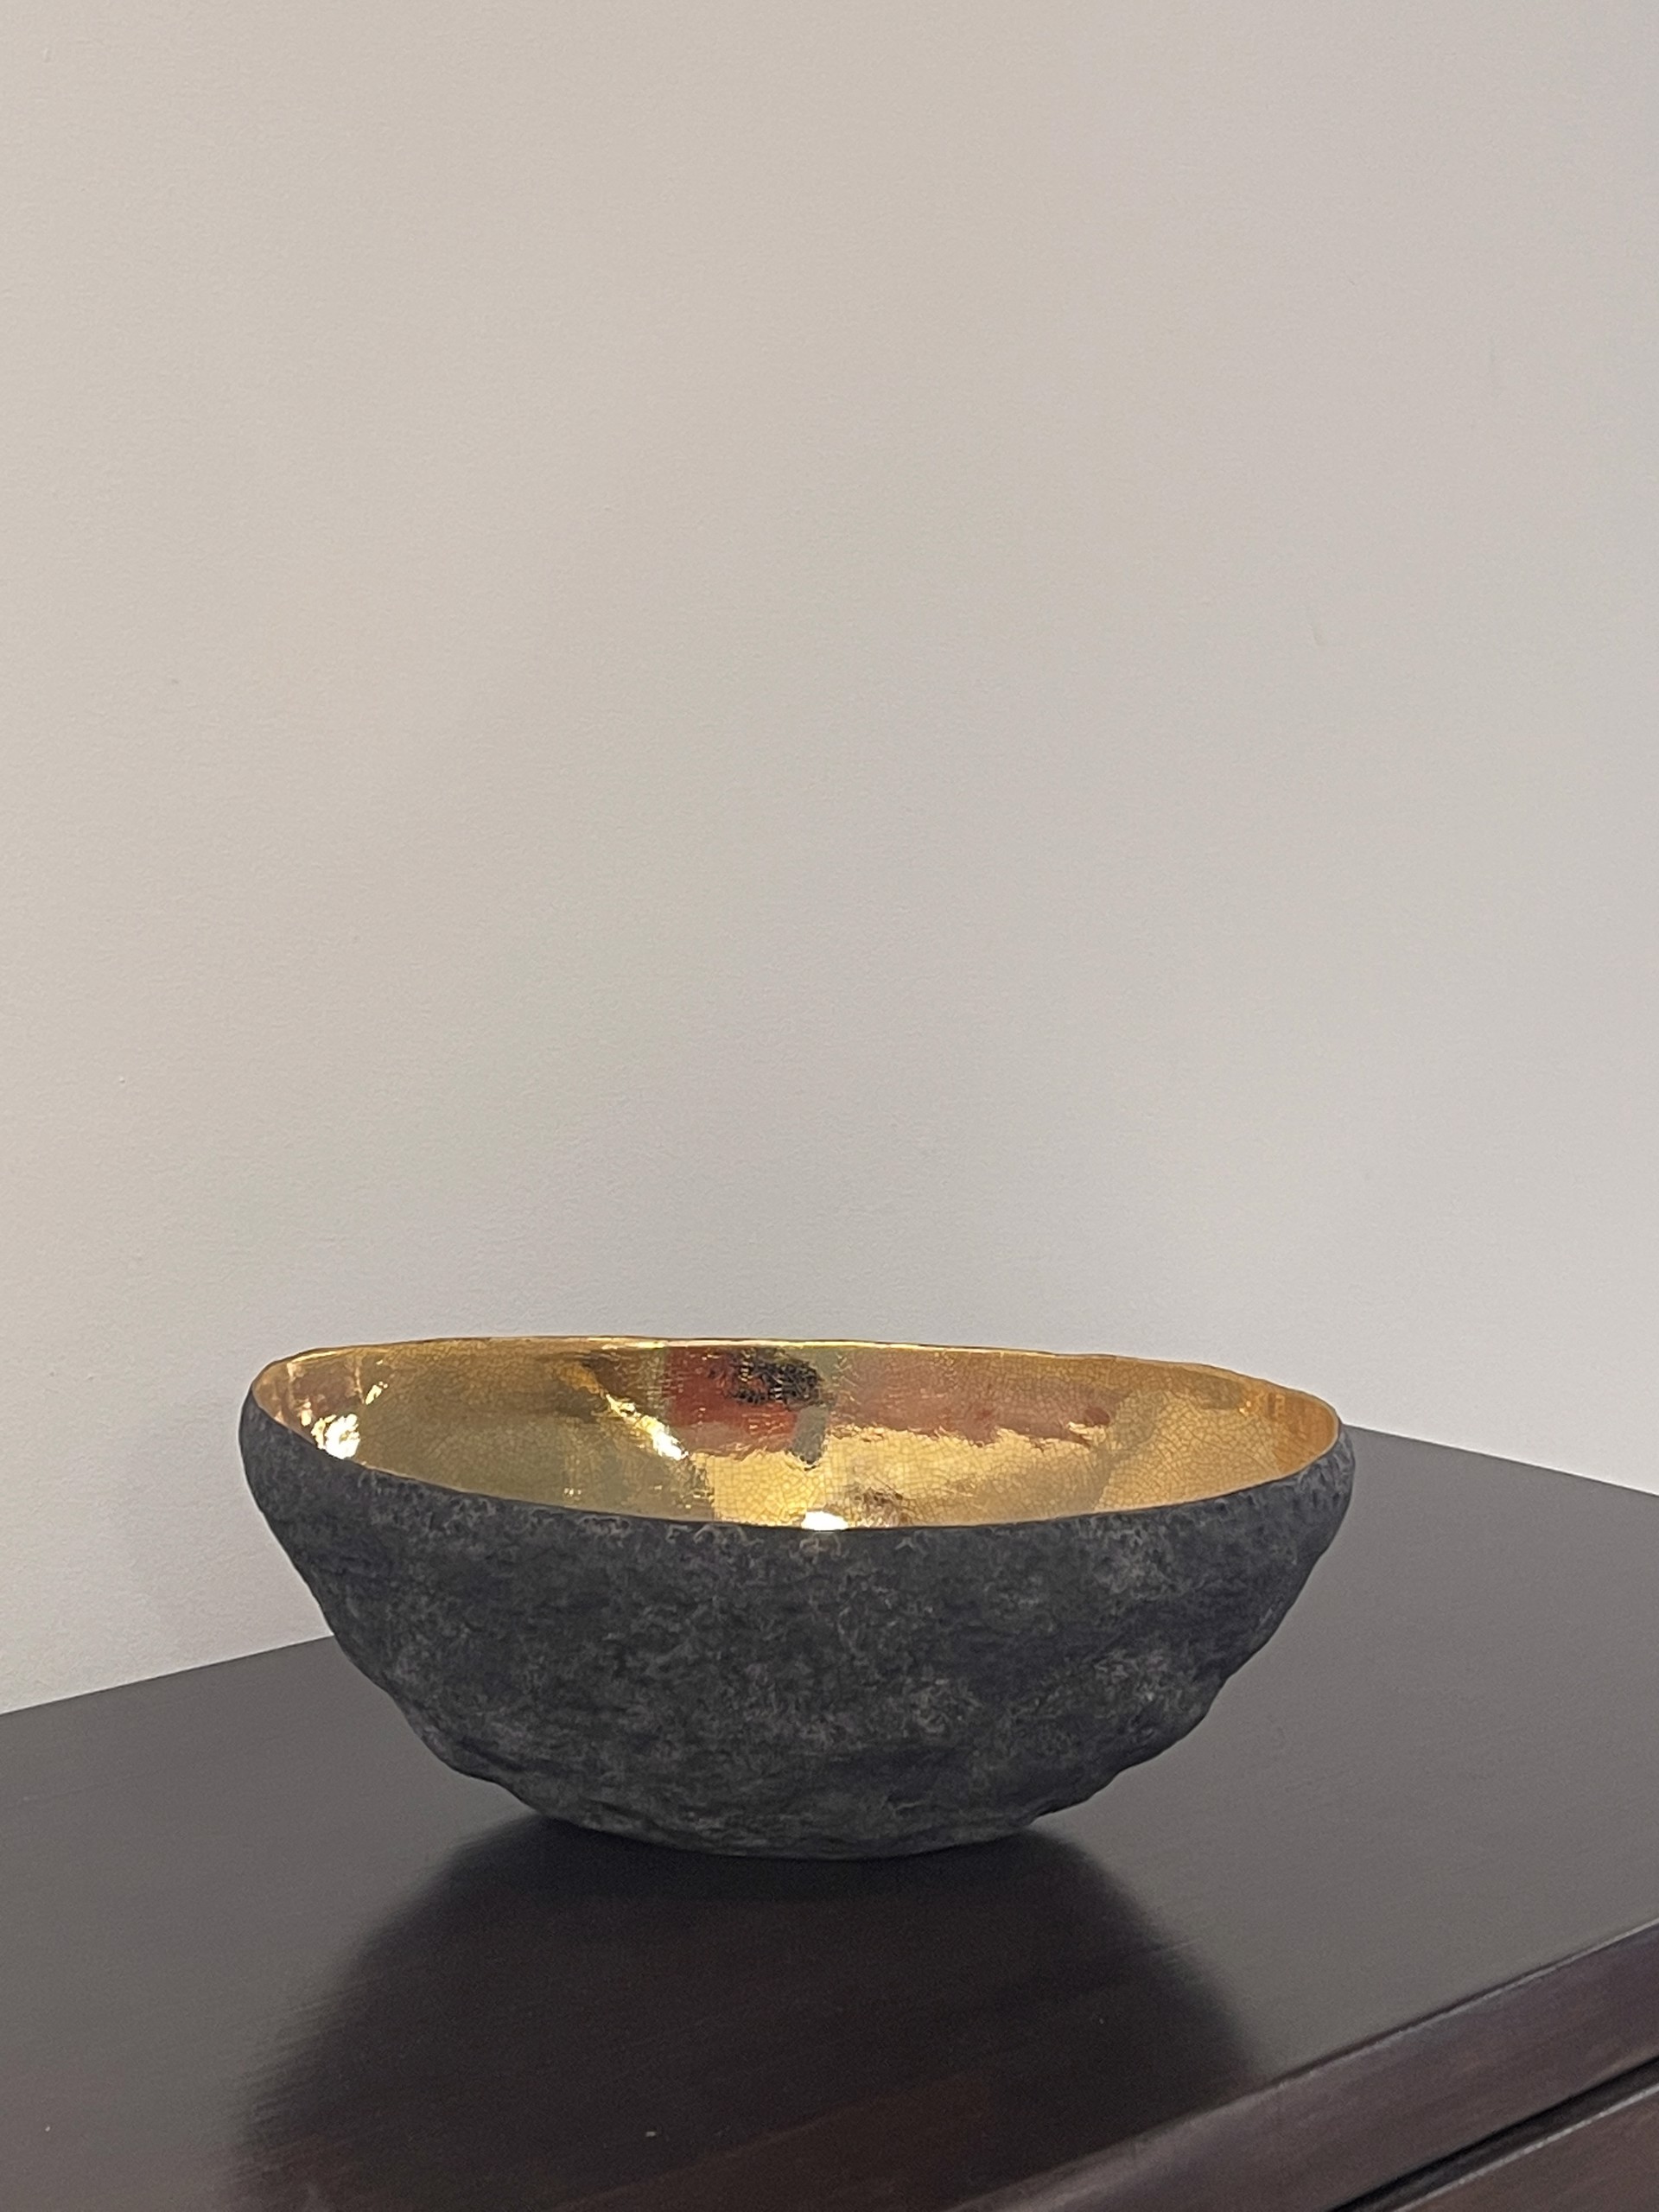 Oval vessel with gold by Cristina Salusti